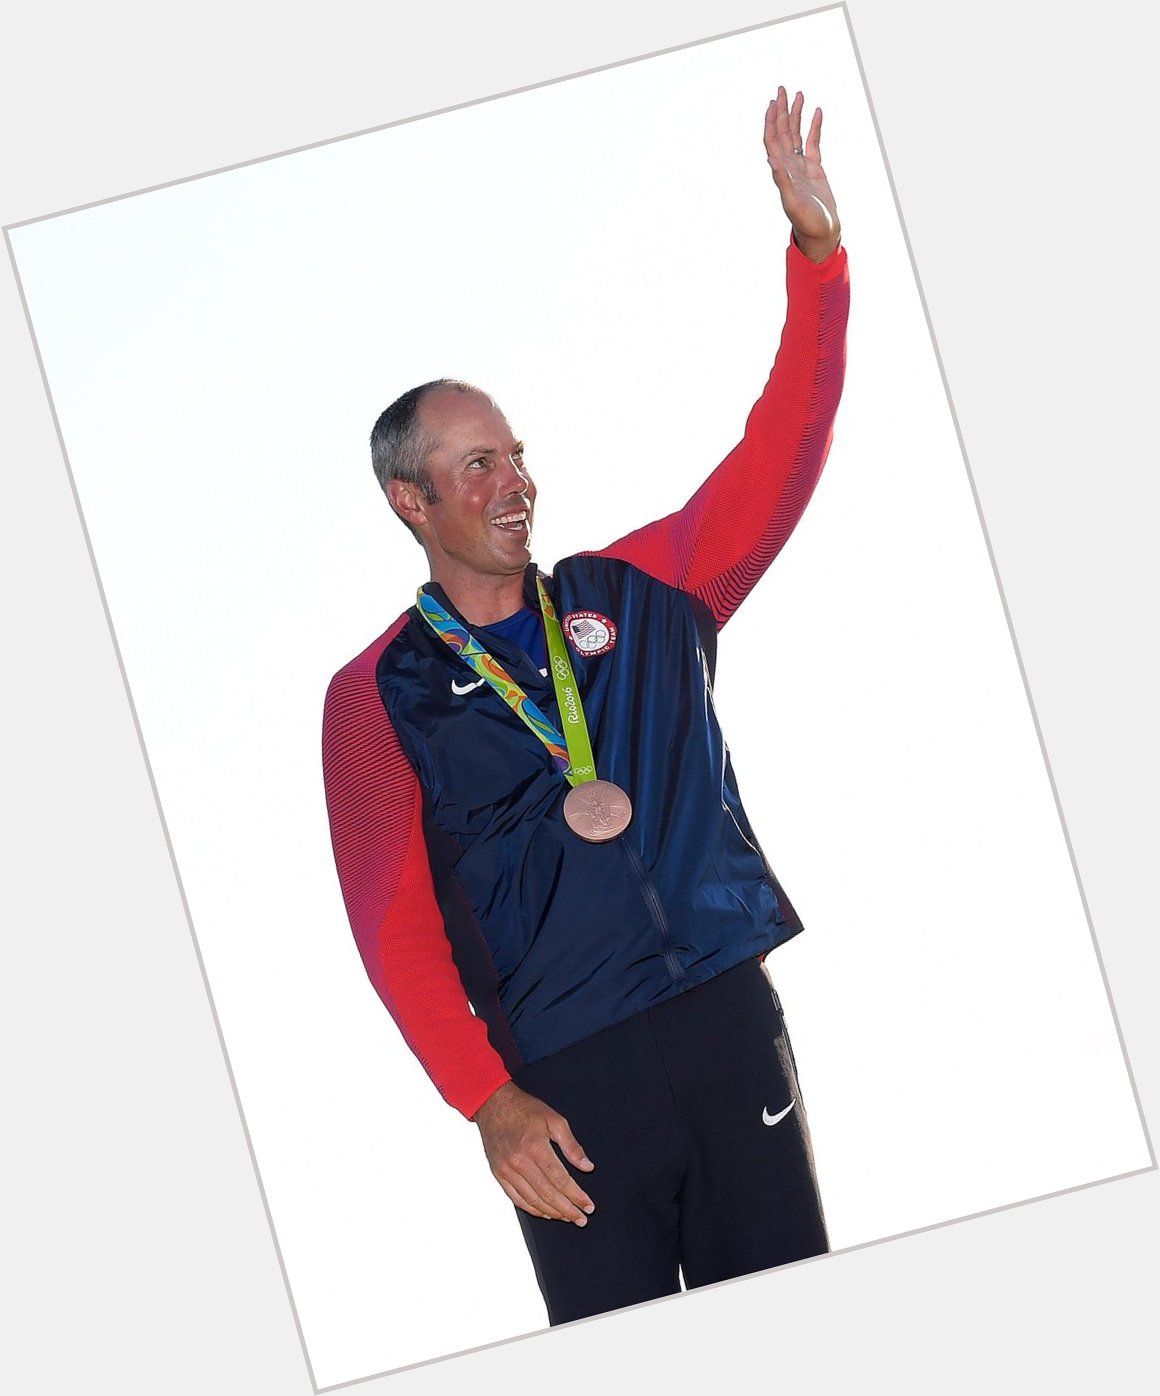 KUUCCCHHH! Happy 40th Birthday to our 2016 bronze medalist, Matt Kuchar! 